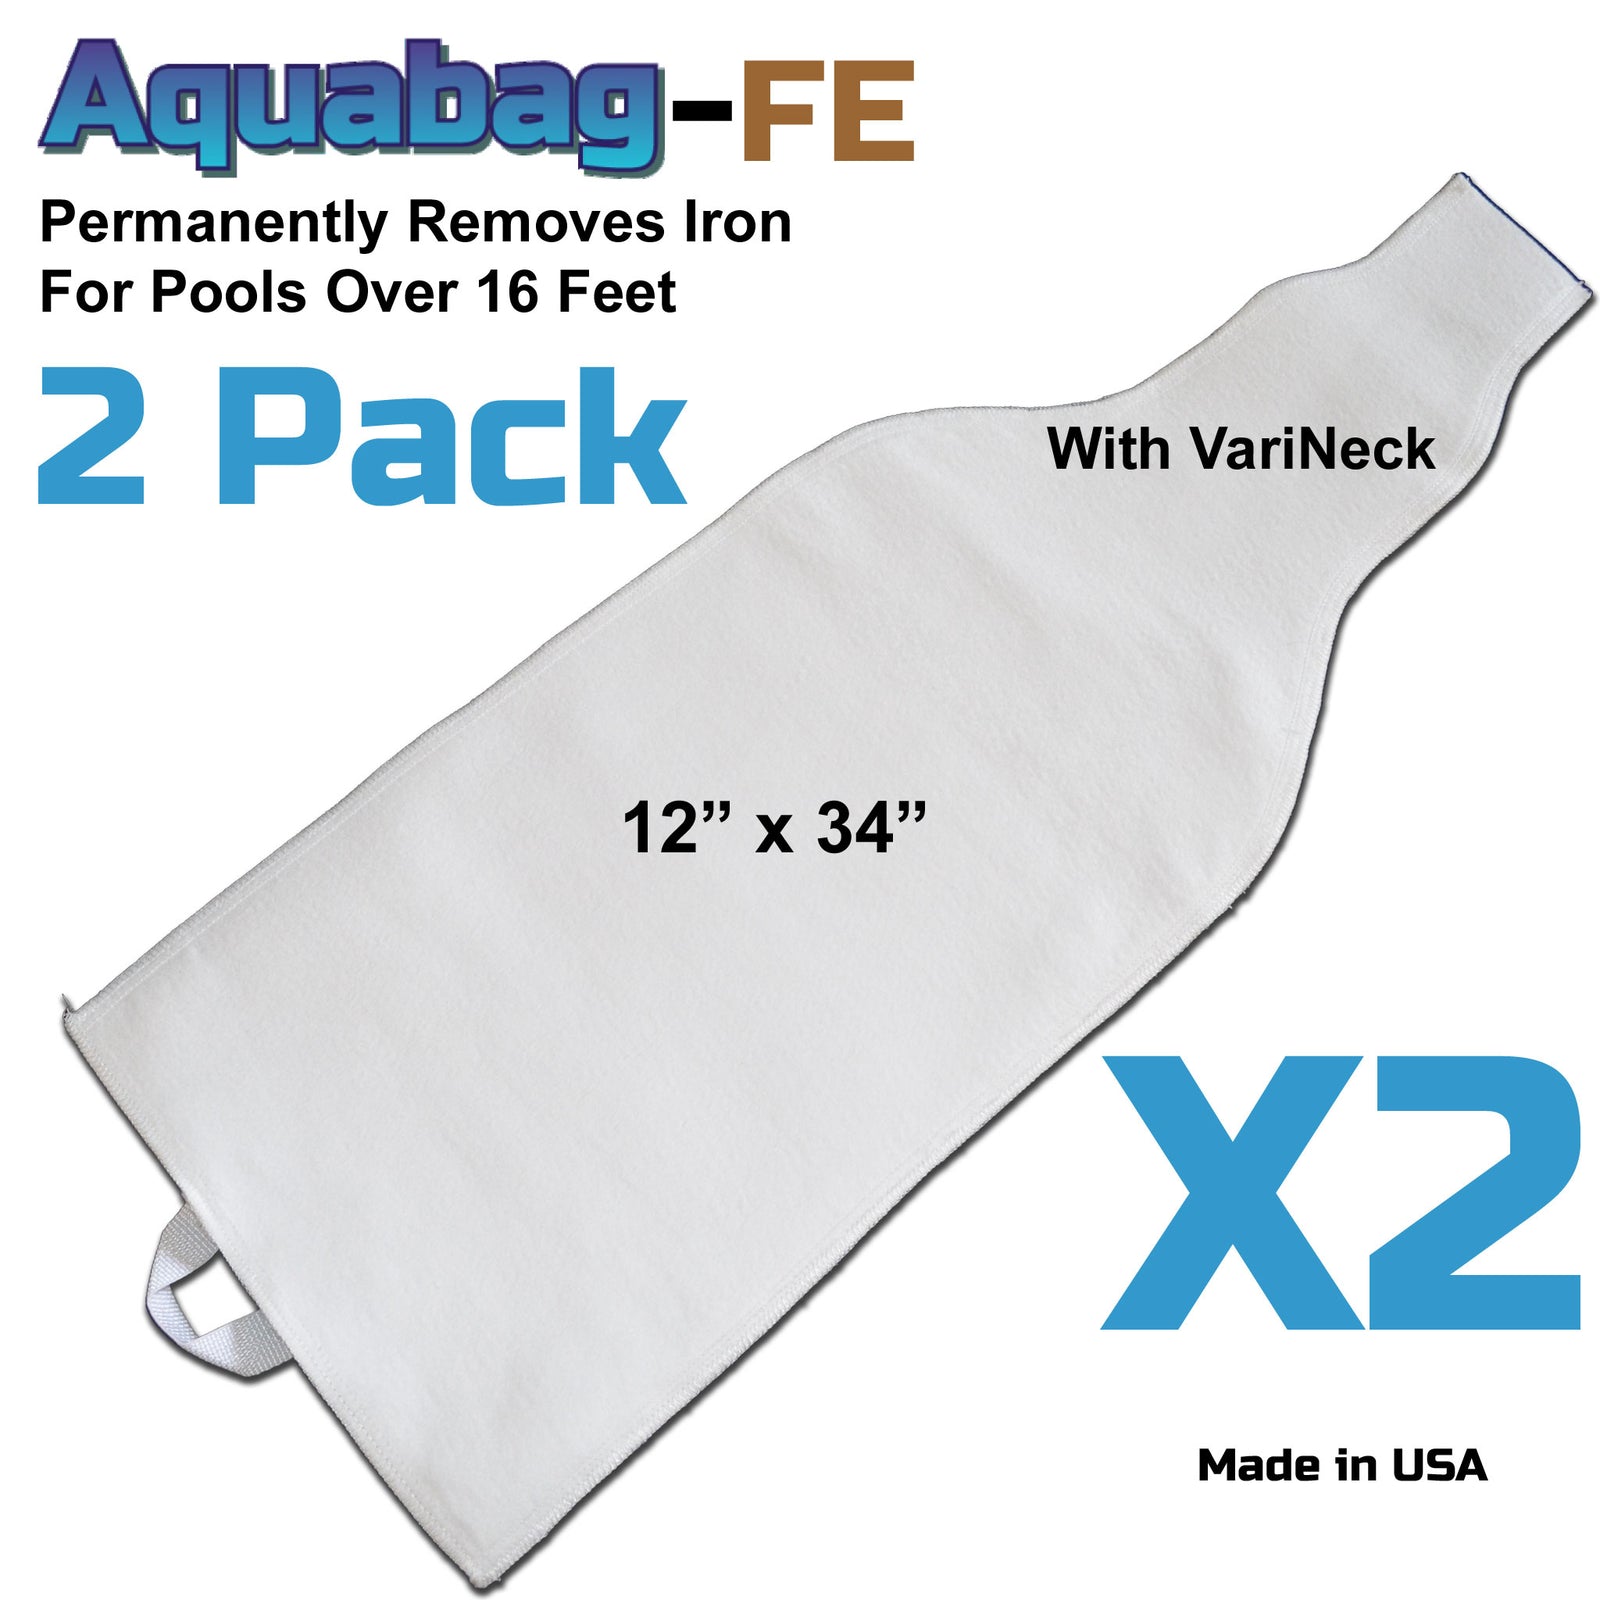 Two Pack of Large Aquabag FE